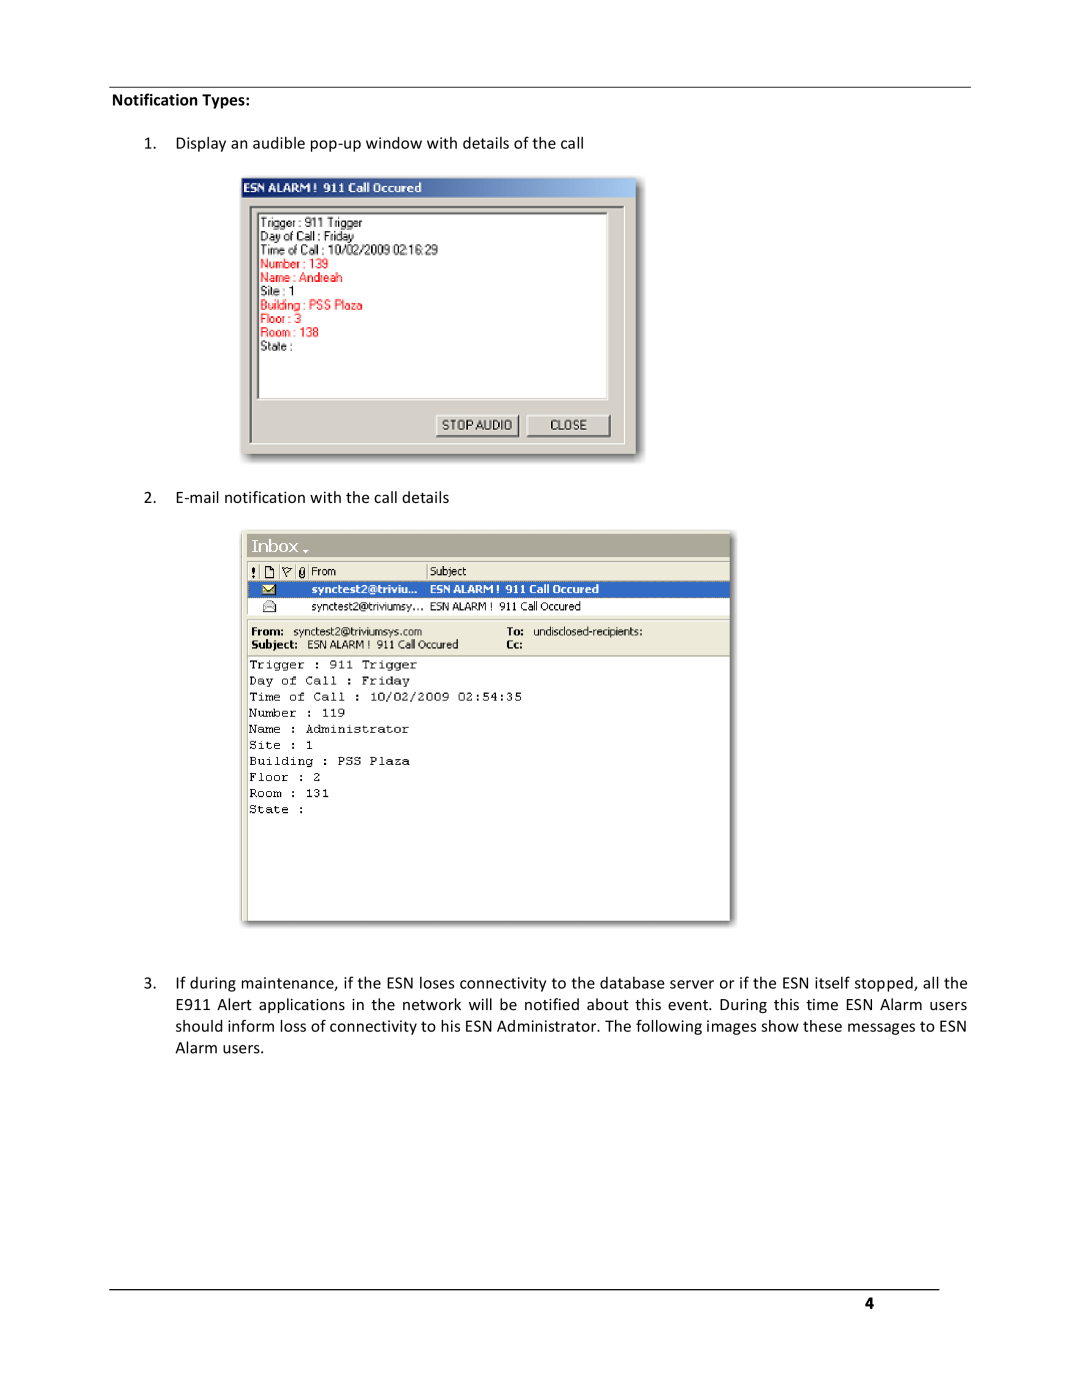 NEC SMB8000 manual Notification Types 